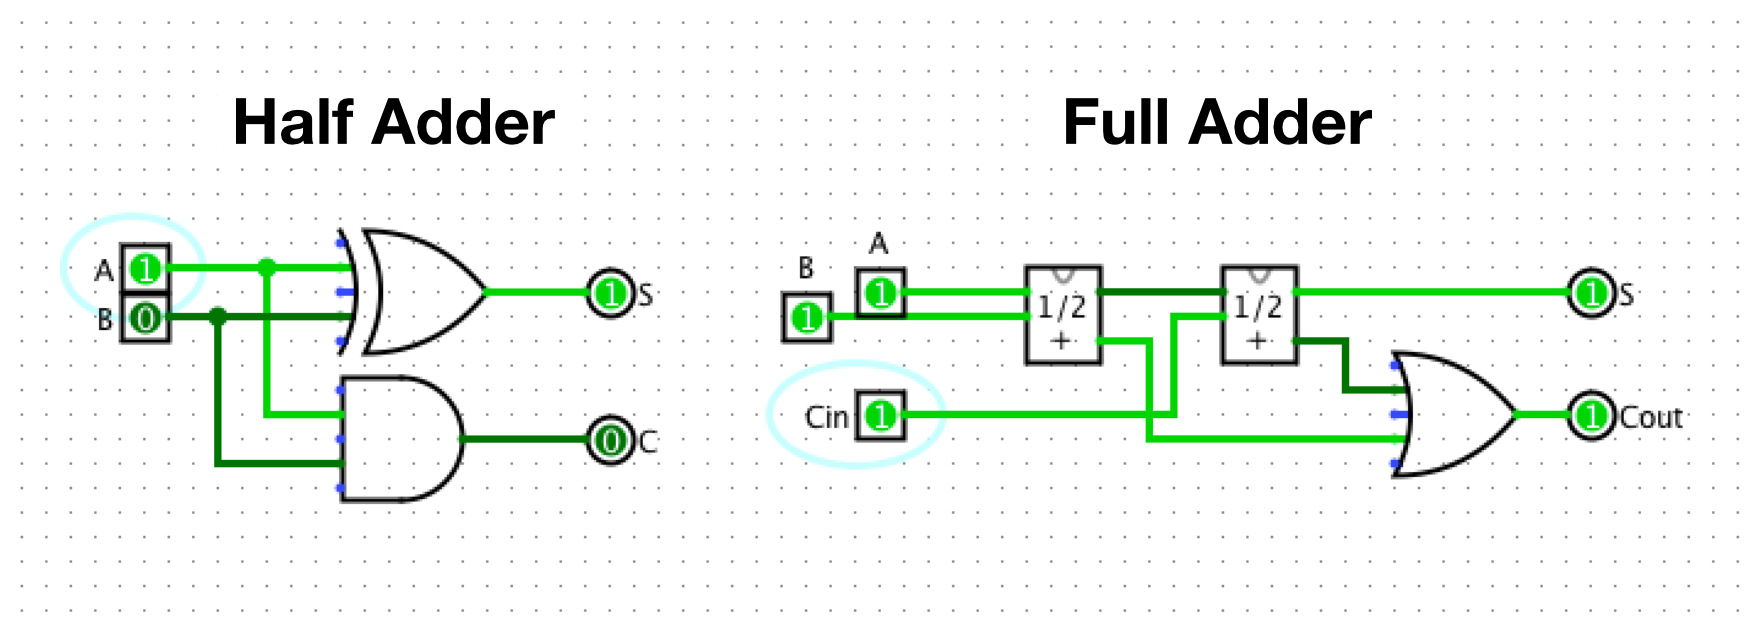 Half and Full Adder Circuit Diagram from Basic Logic Gates.